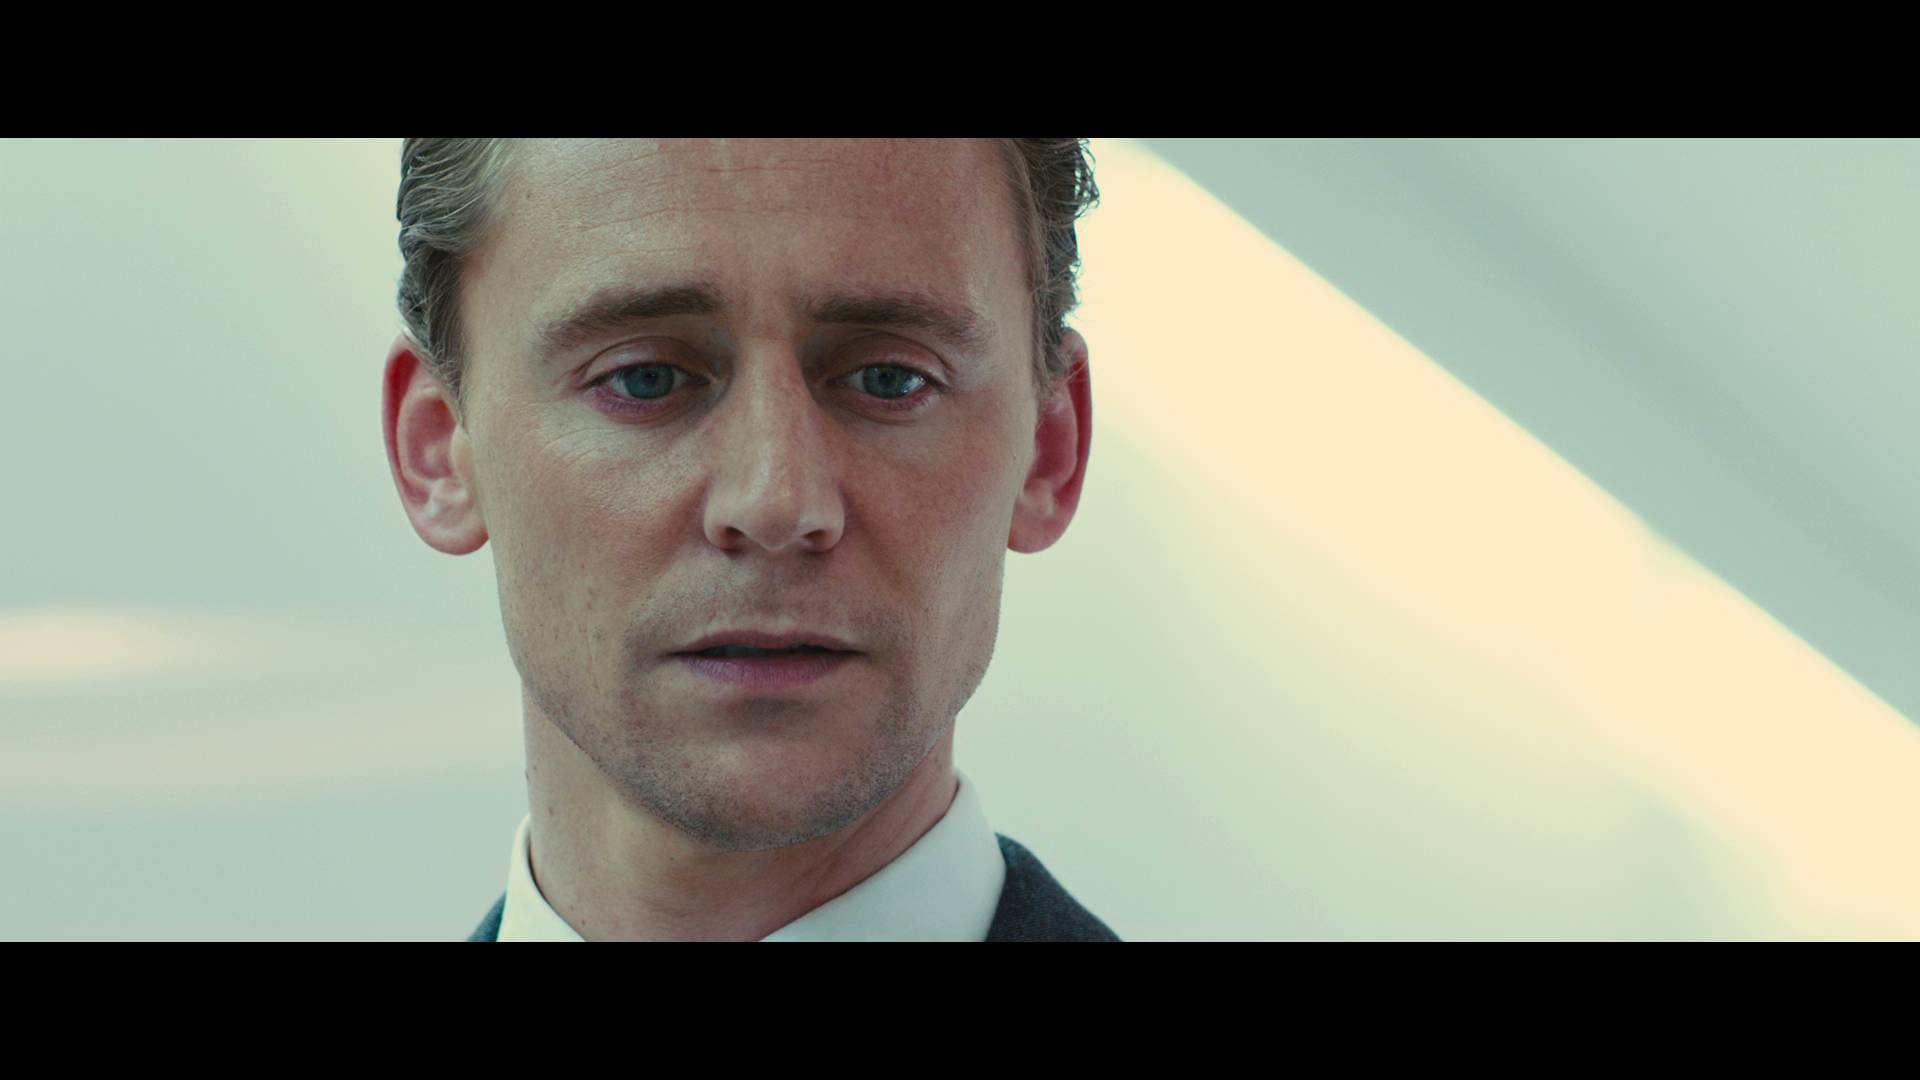 HIGH-RISE - Official Trailer - Starring Tom Hiddleston 